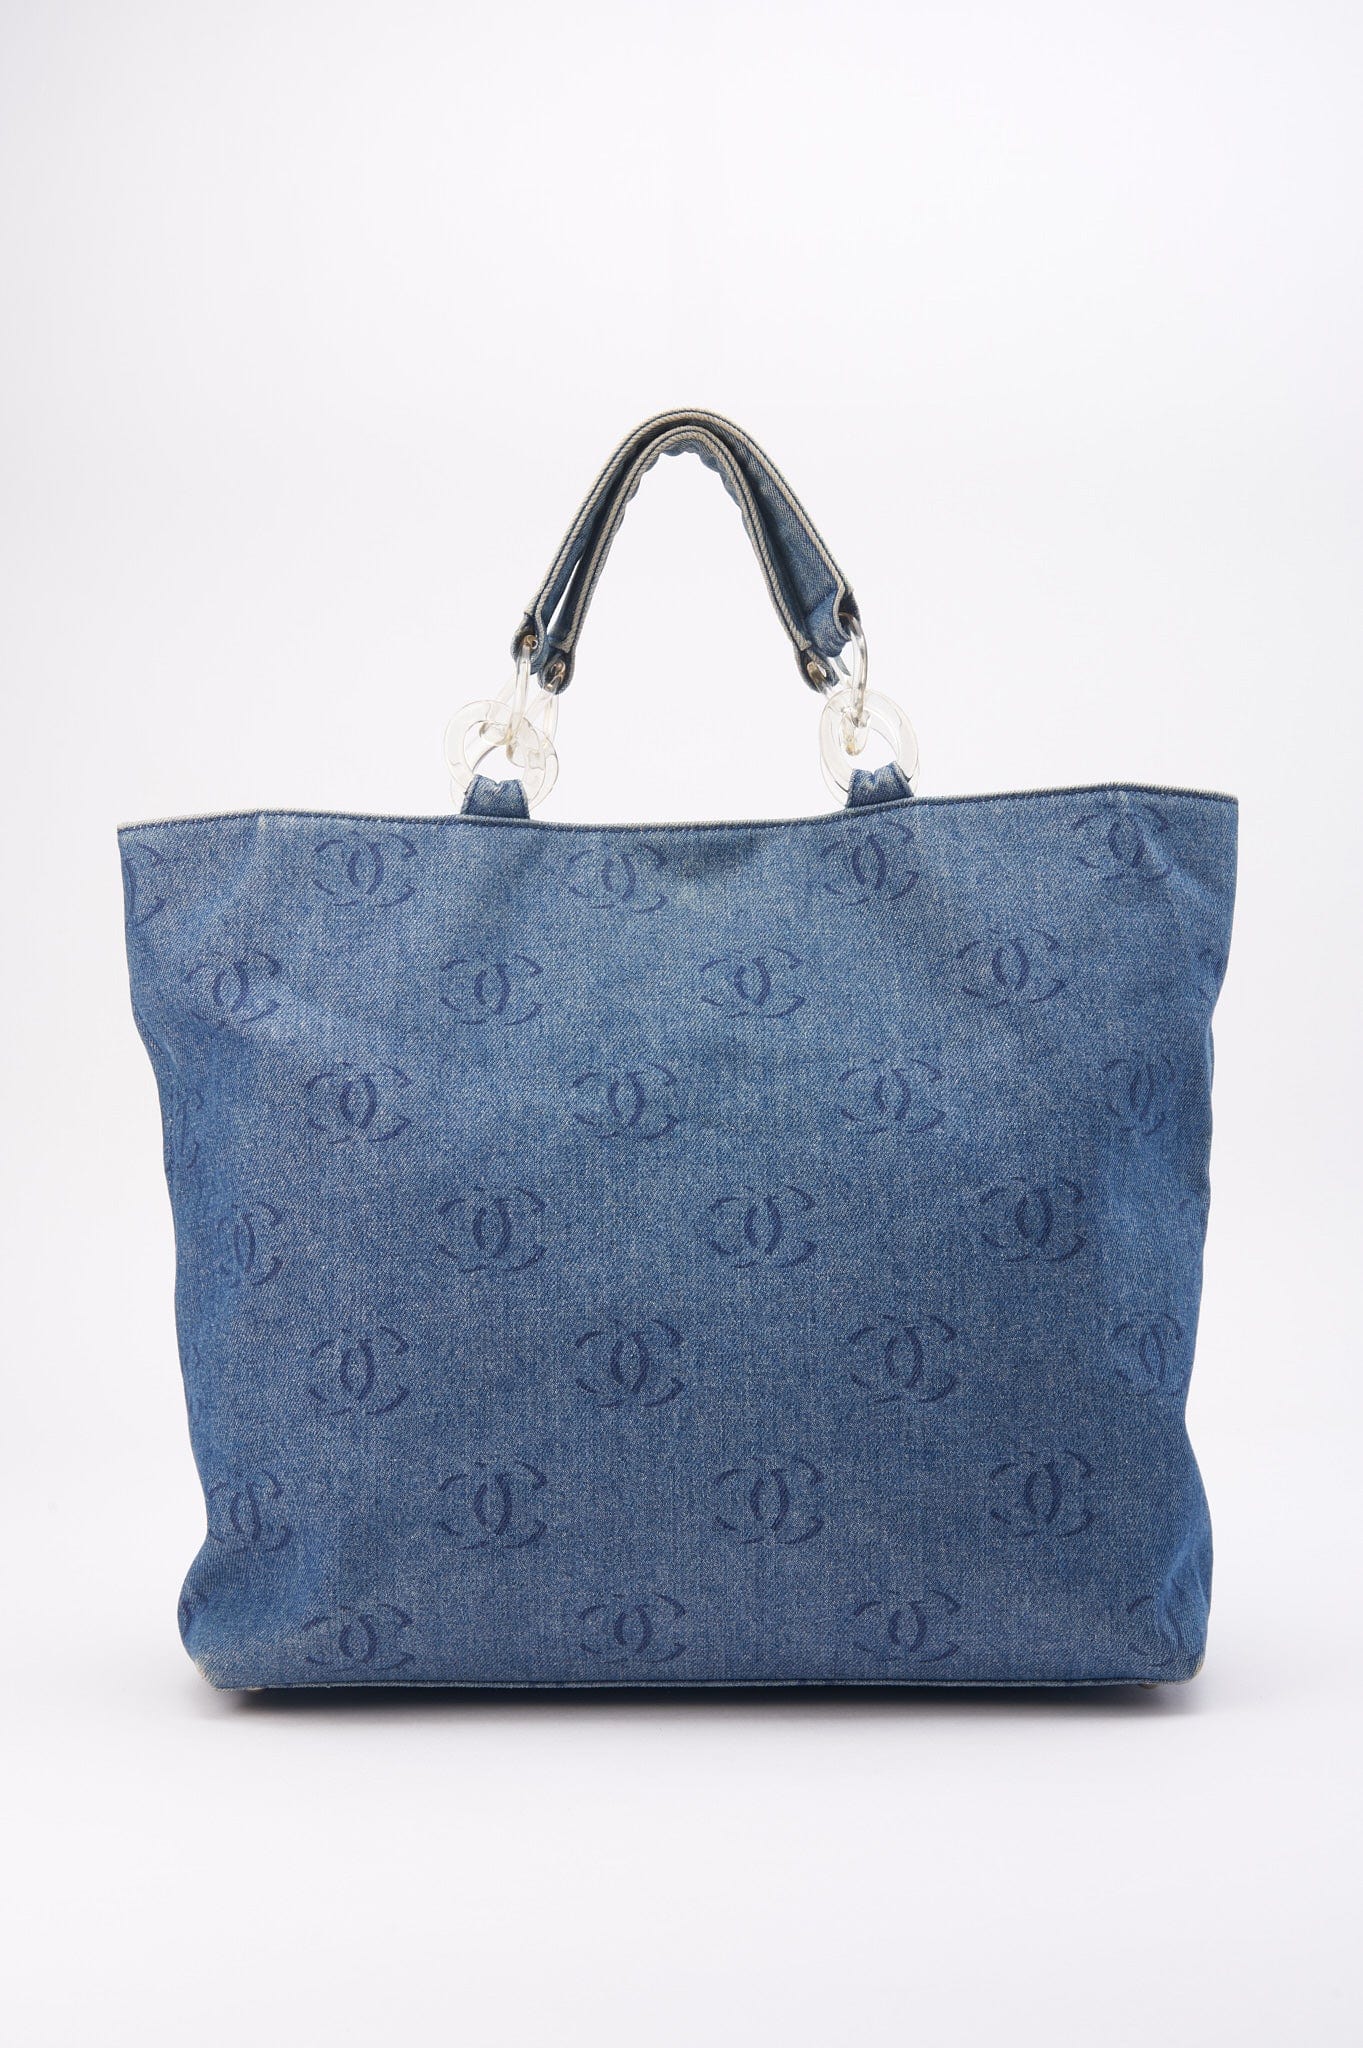 Chanel Blue Denim Tote Bag With CC Print